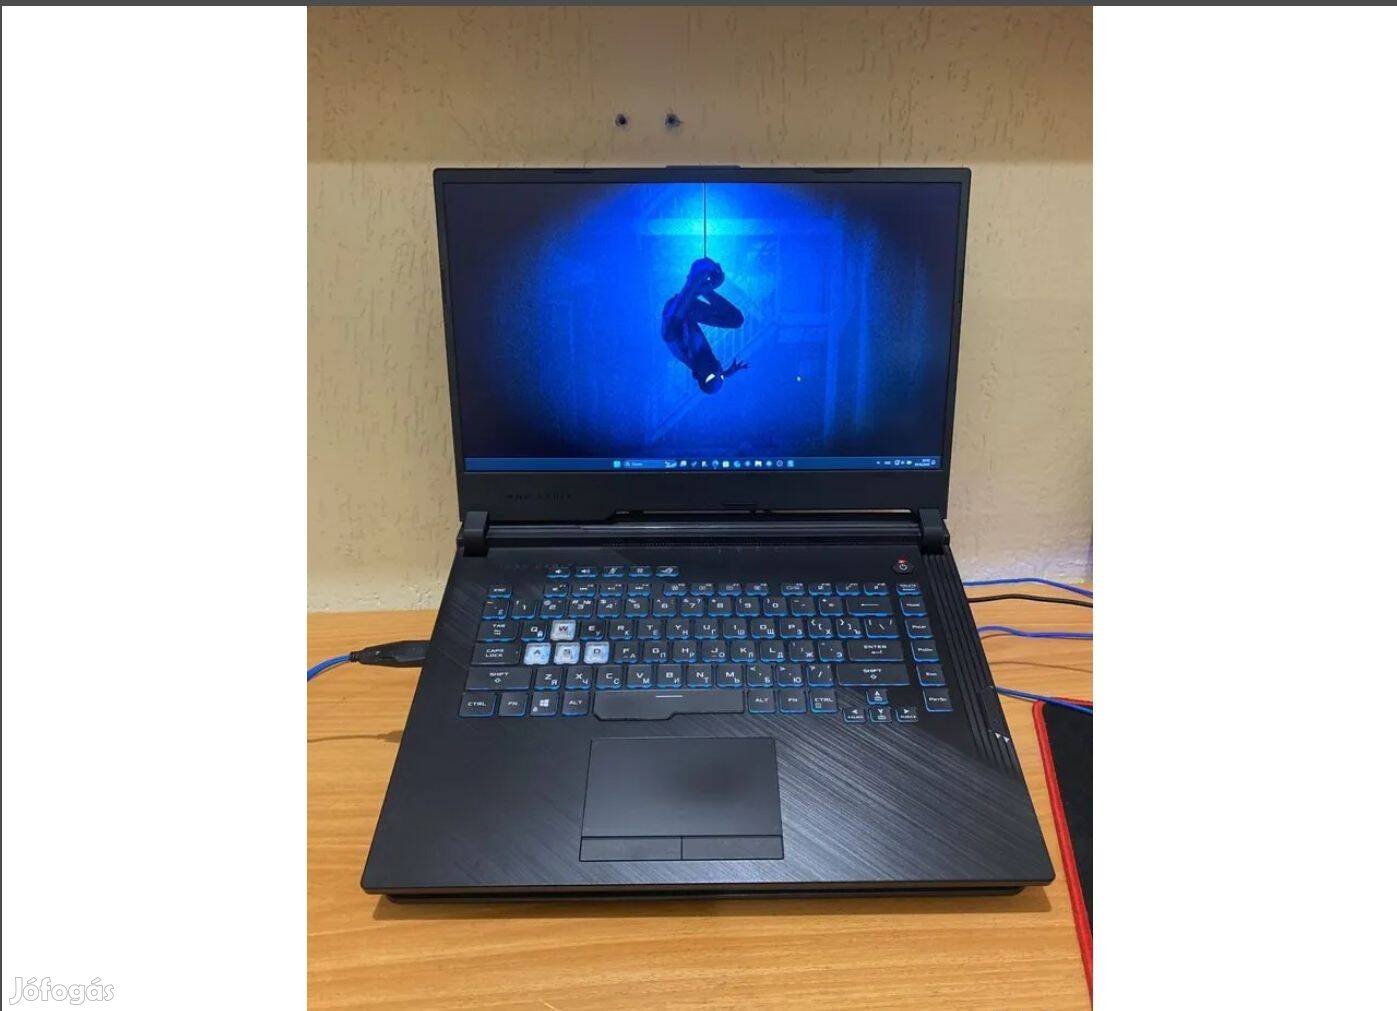 Asus rog strix laptop eladó Full HD kijelző 120 Hz-es Gtx 1660 Ti 6 GB